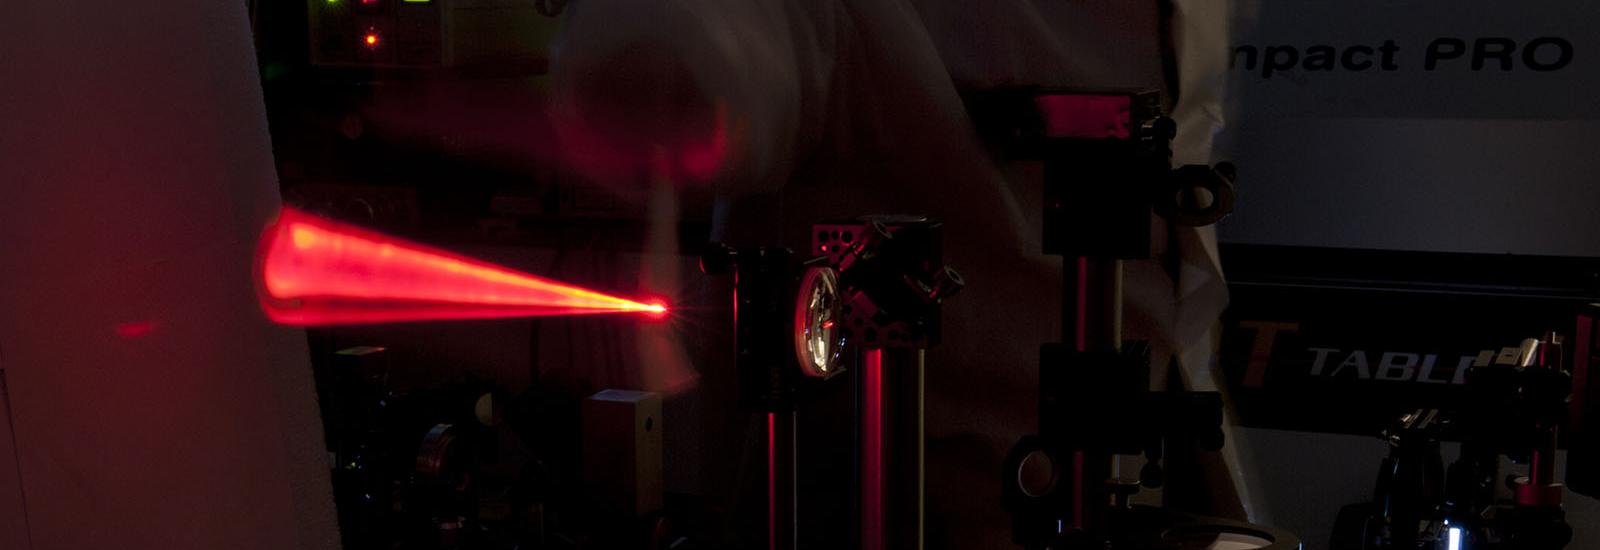 laser in lab